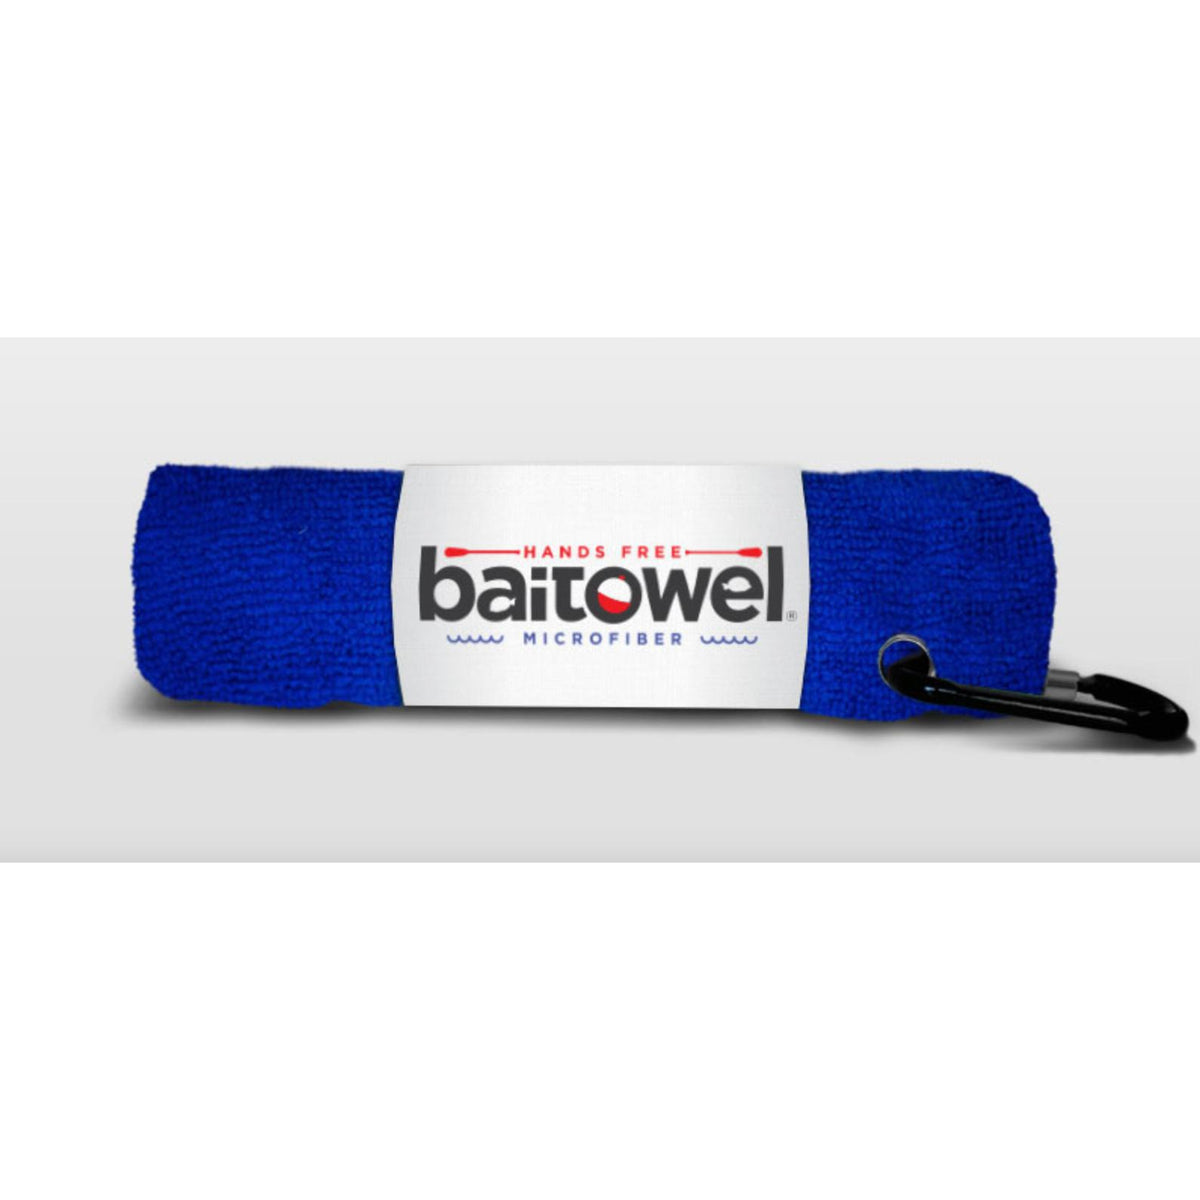 Bait Towel Fishing's Best Microfiber Towel (Pack of 3), Towels -   Canada